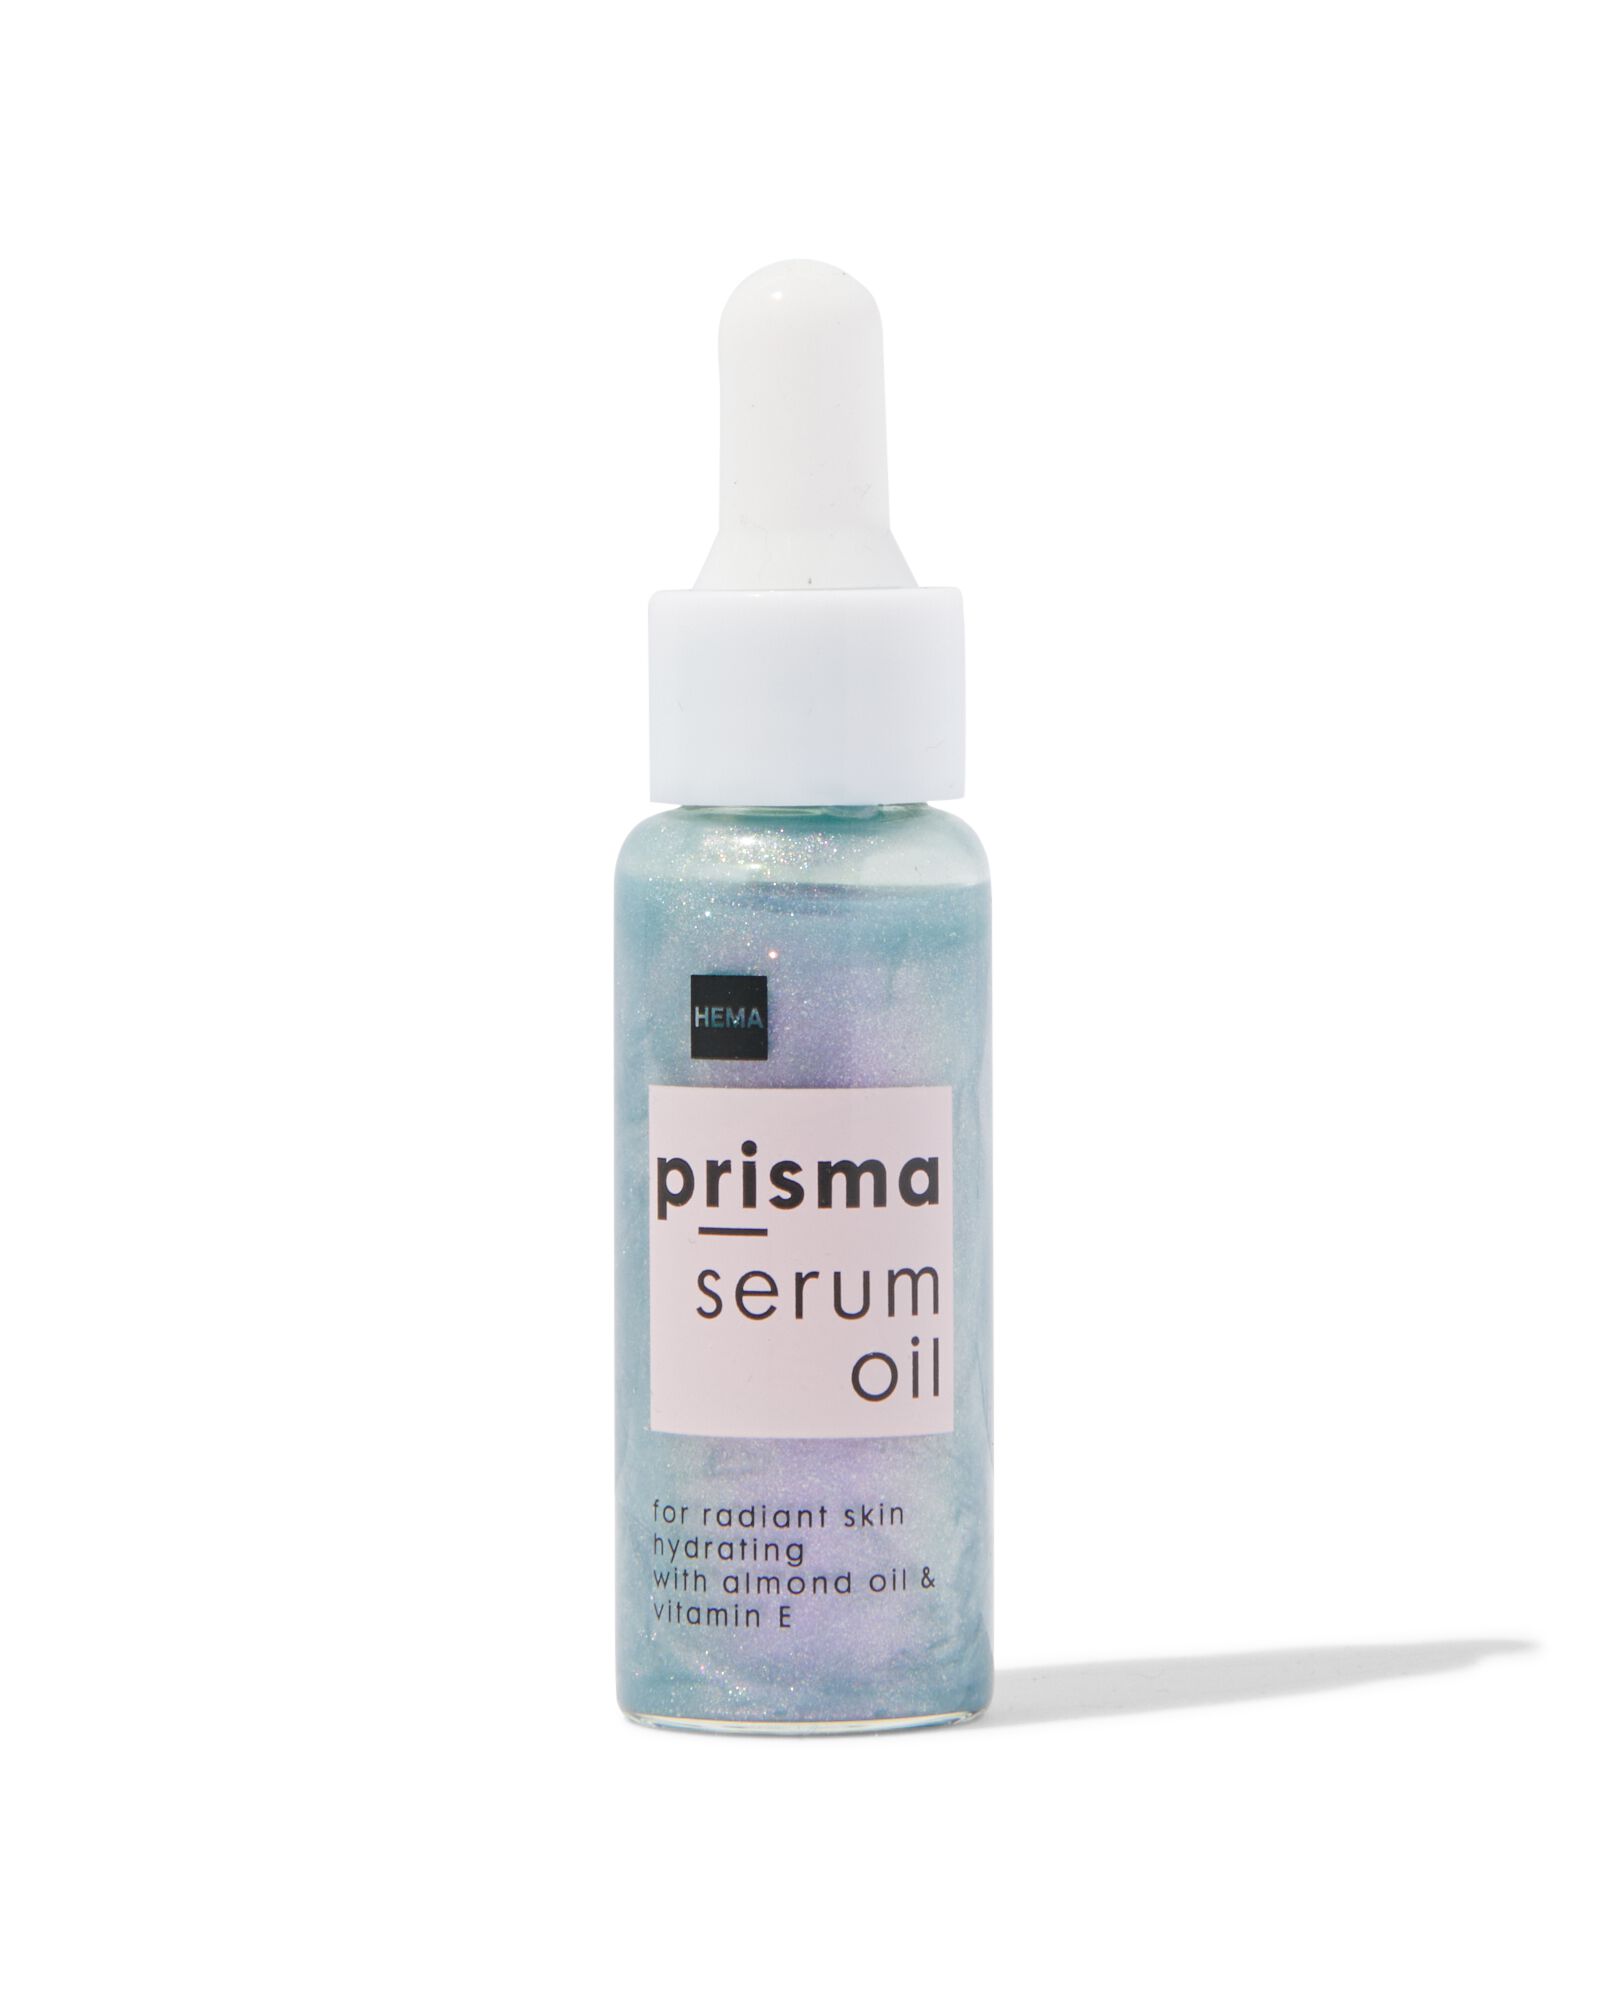 huile sérum prisma 20ml - 17790115 - HEMA